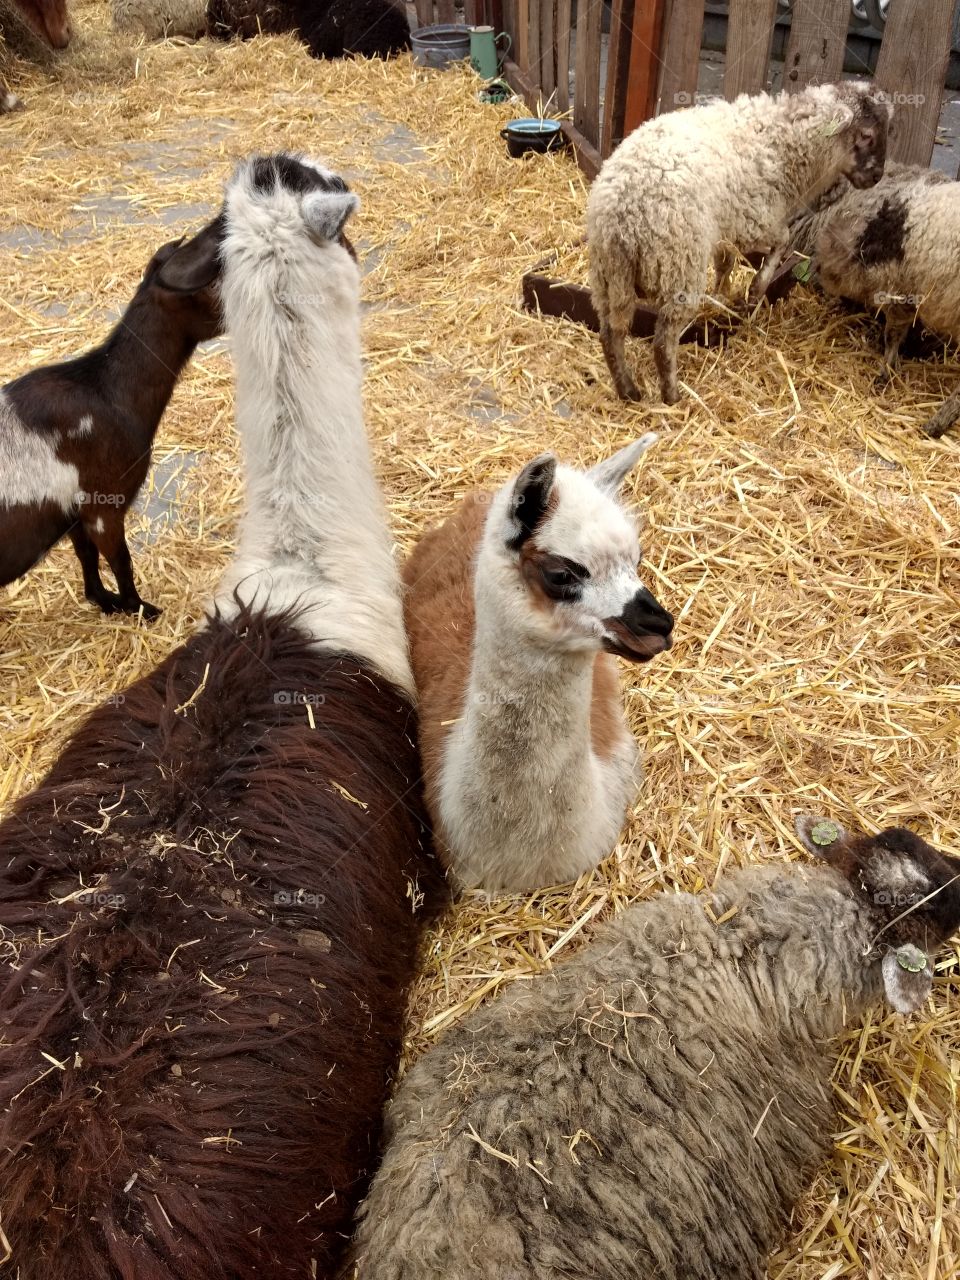 alpaca, goat and sheep in straw enjoying their day